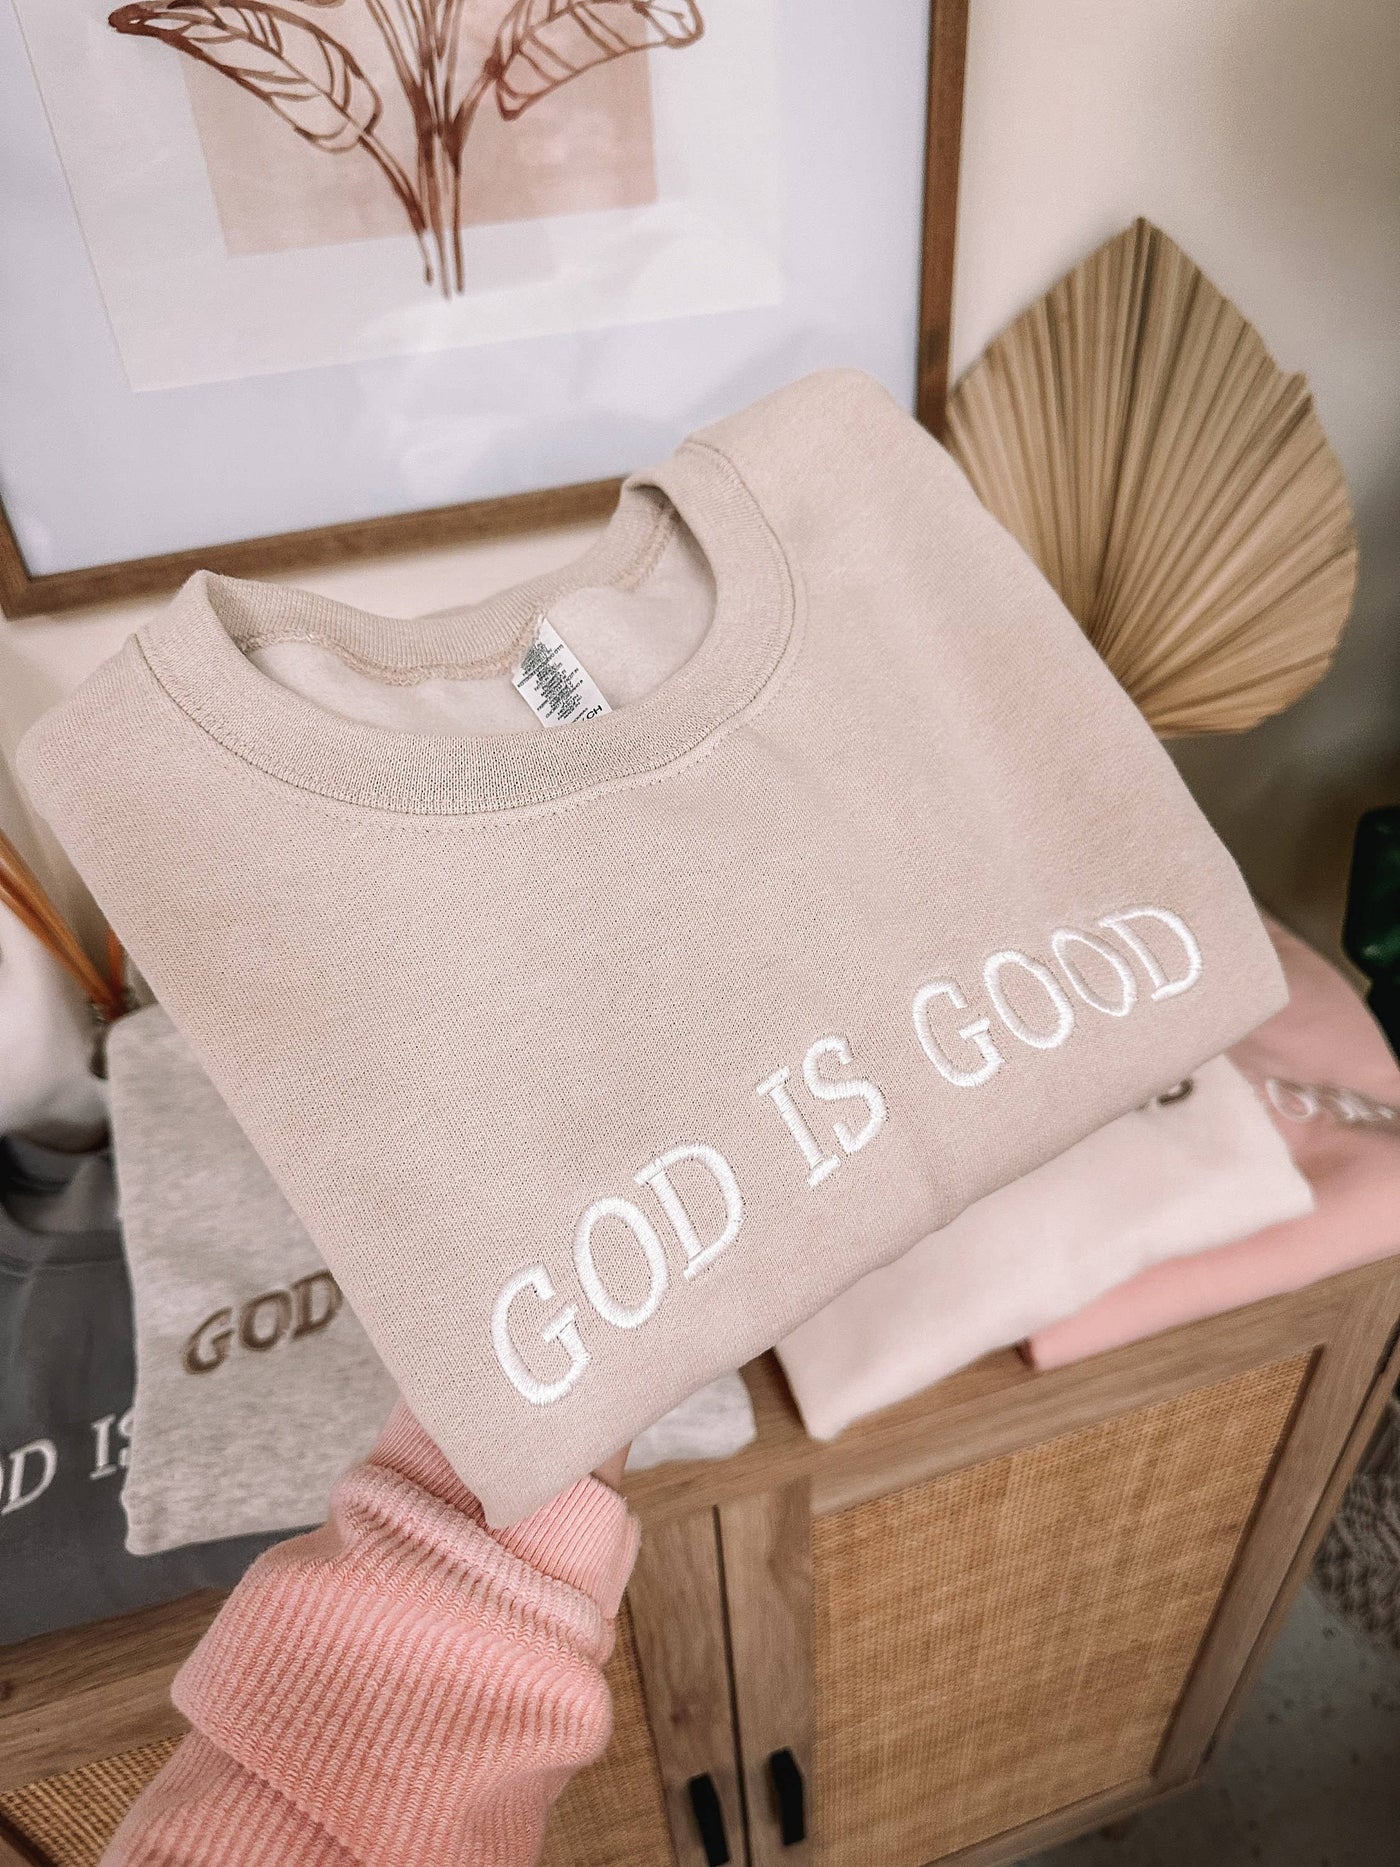 GOD IS GOOD SWEATSHIRT - SAND